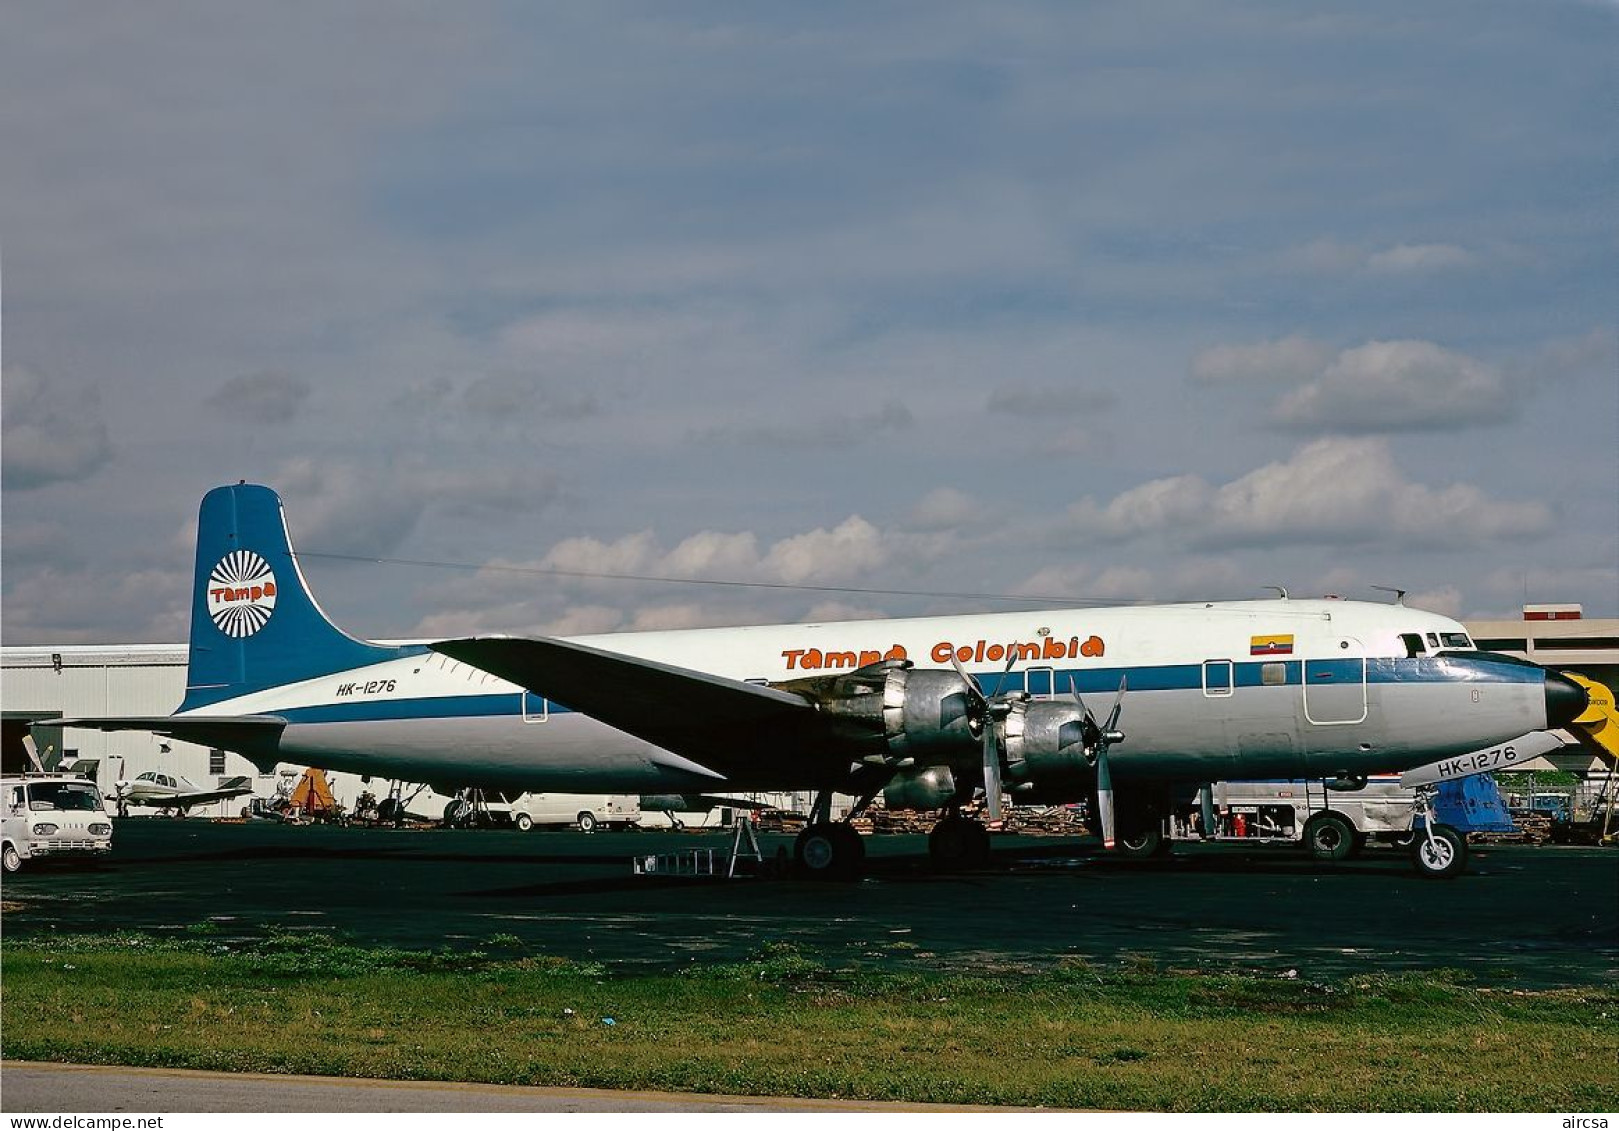 Aviation Postcard-WGA-1470 TAMPA COLOMBIA Douglas DC-6 - 1946-....: Modern Era